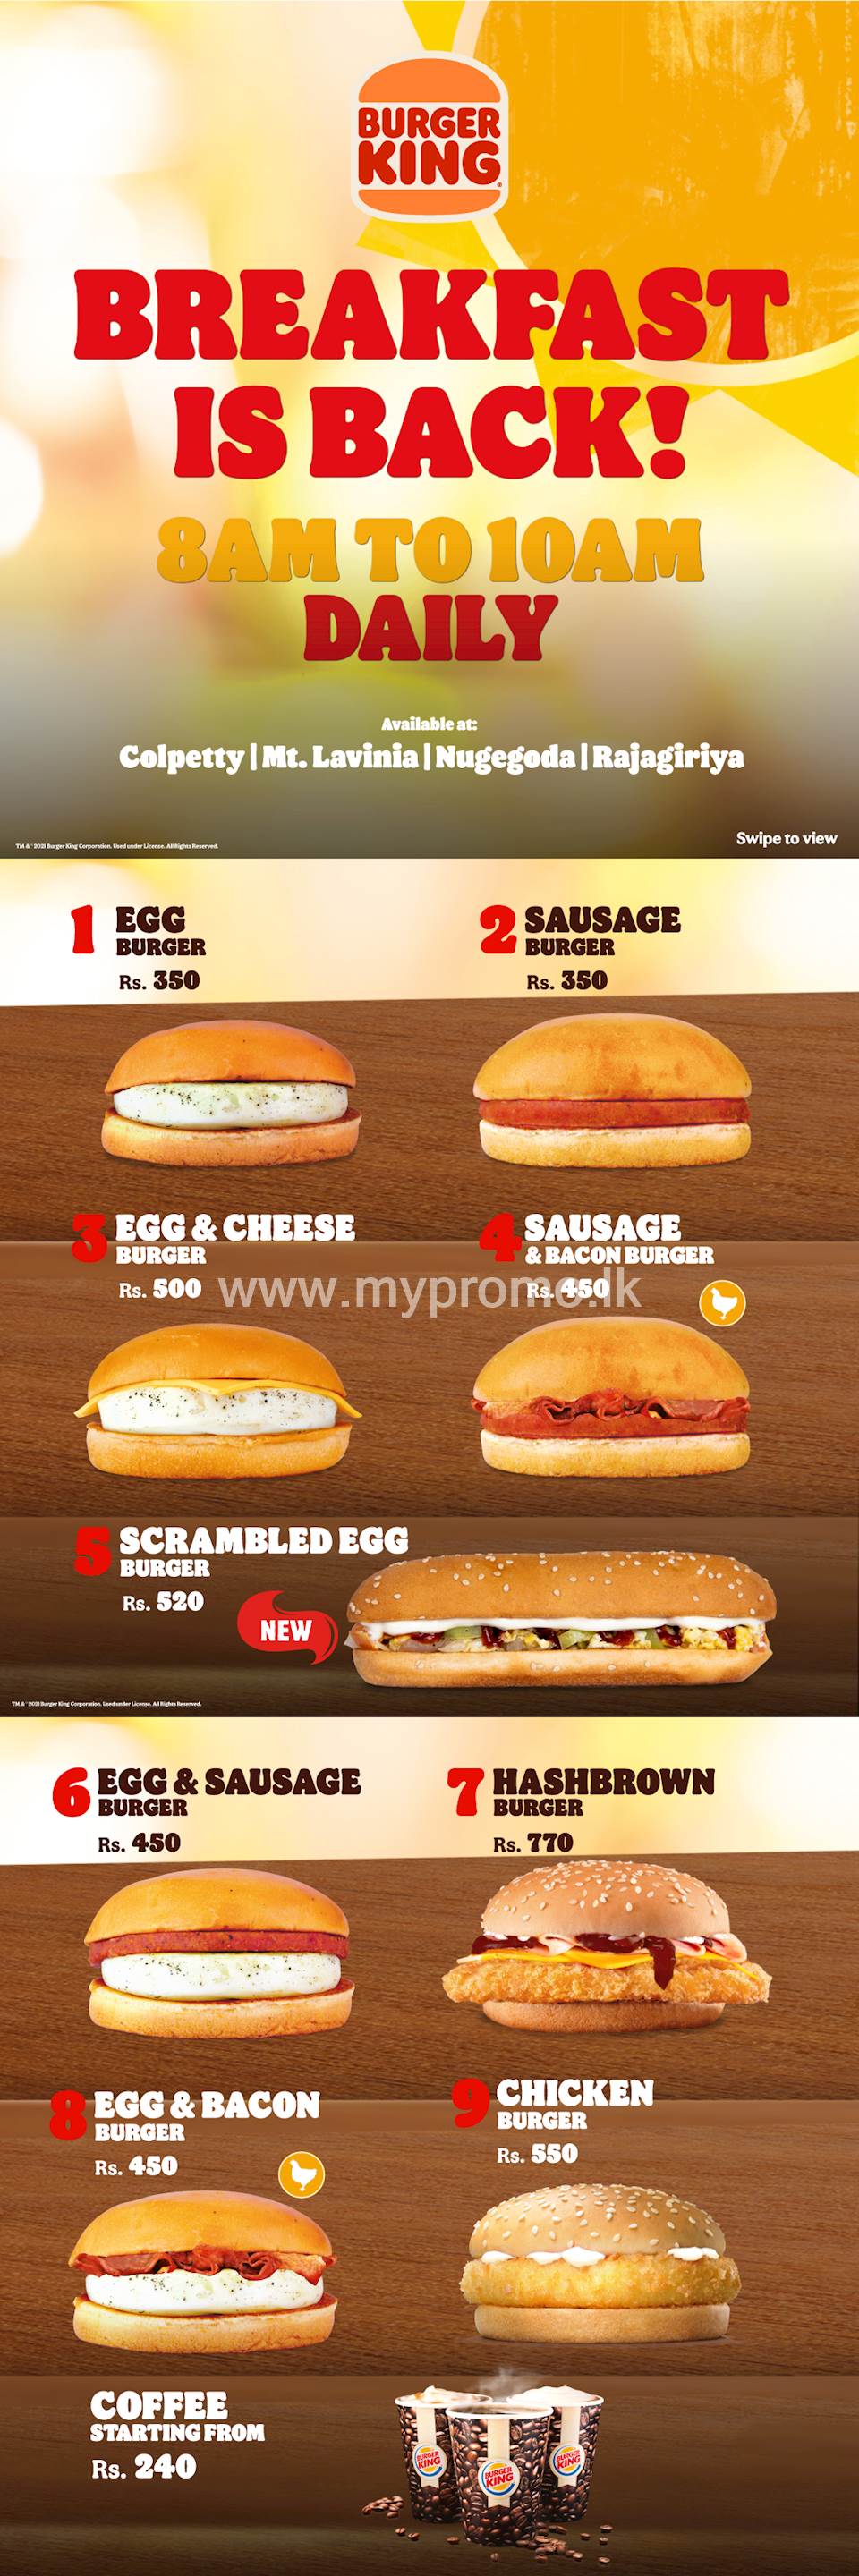 Breakfast menu at Burger King